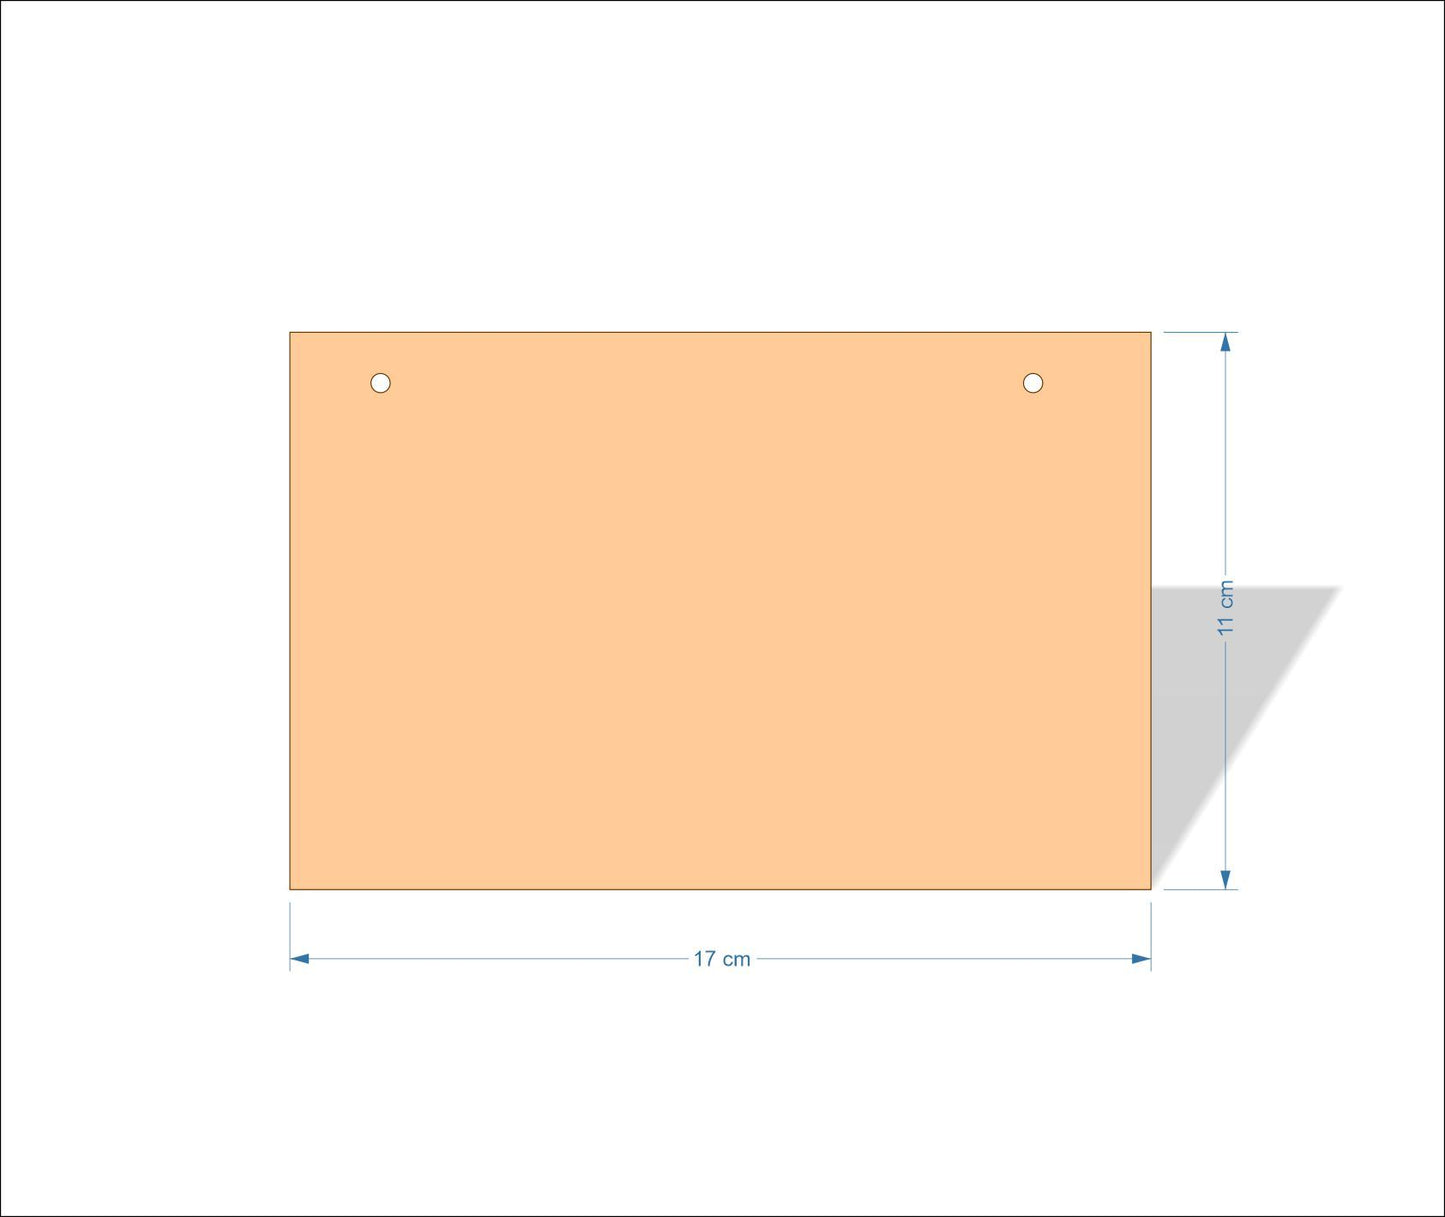 17 cm X 11 cm 3mm MDF Plaques with square corners